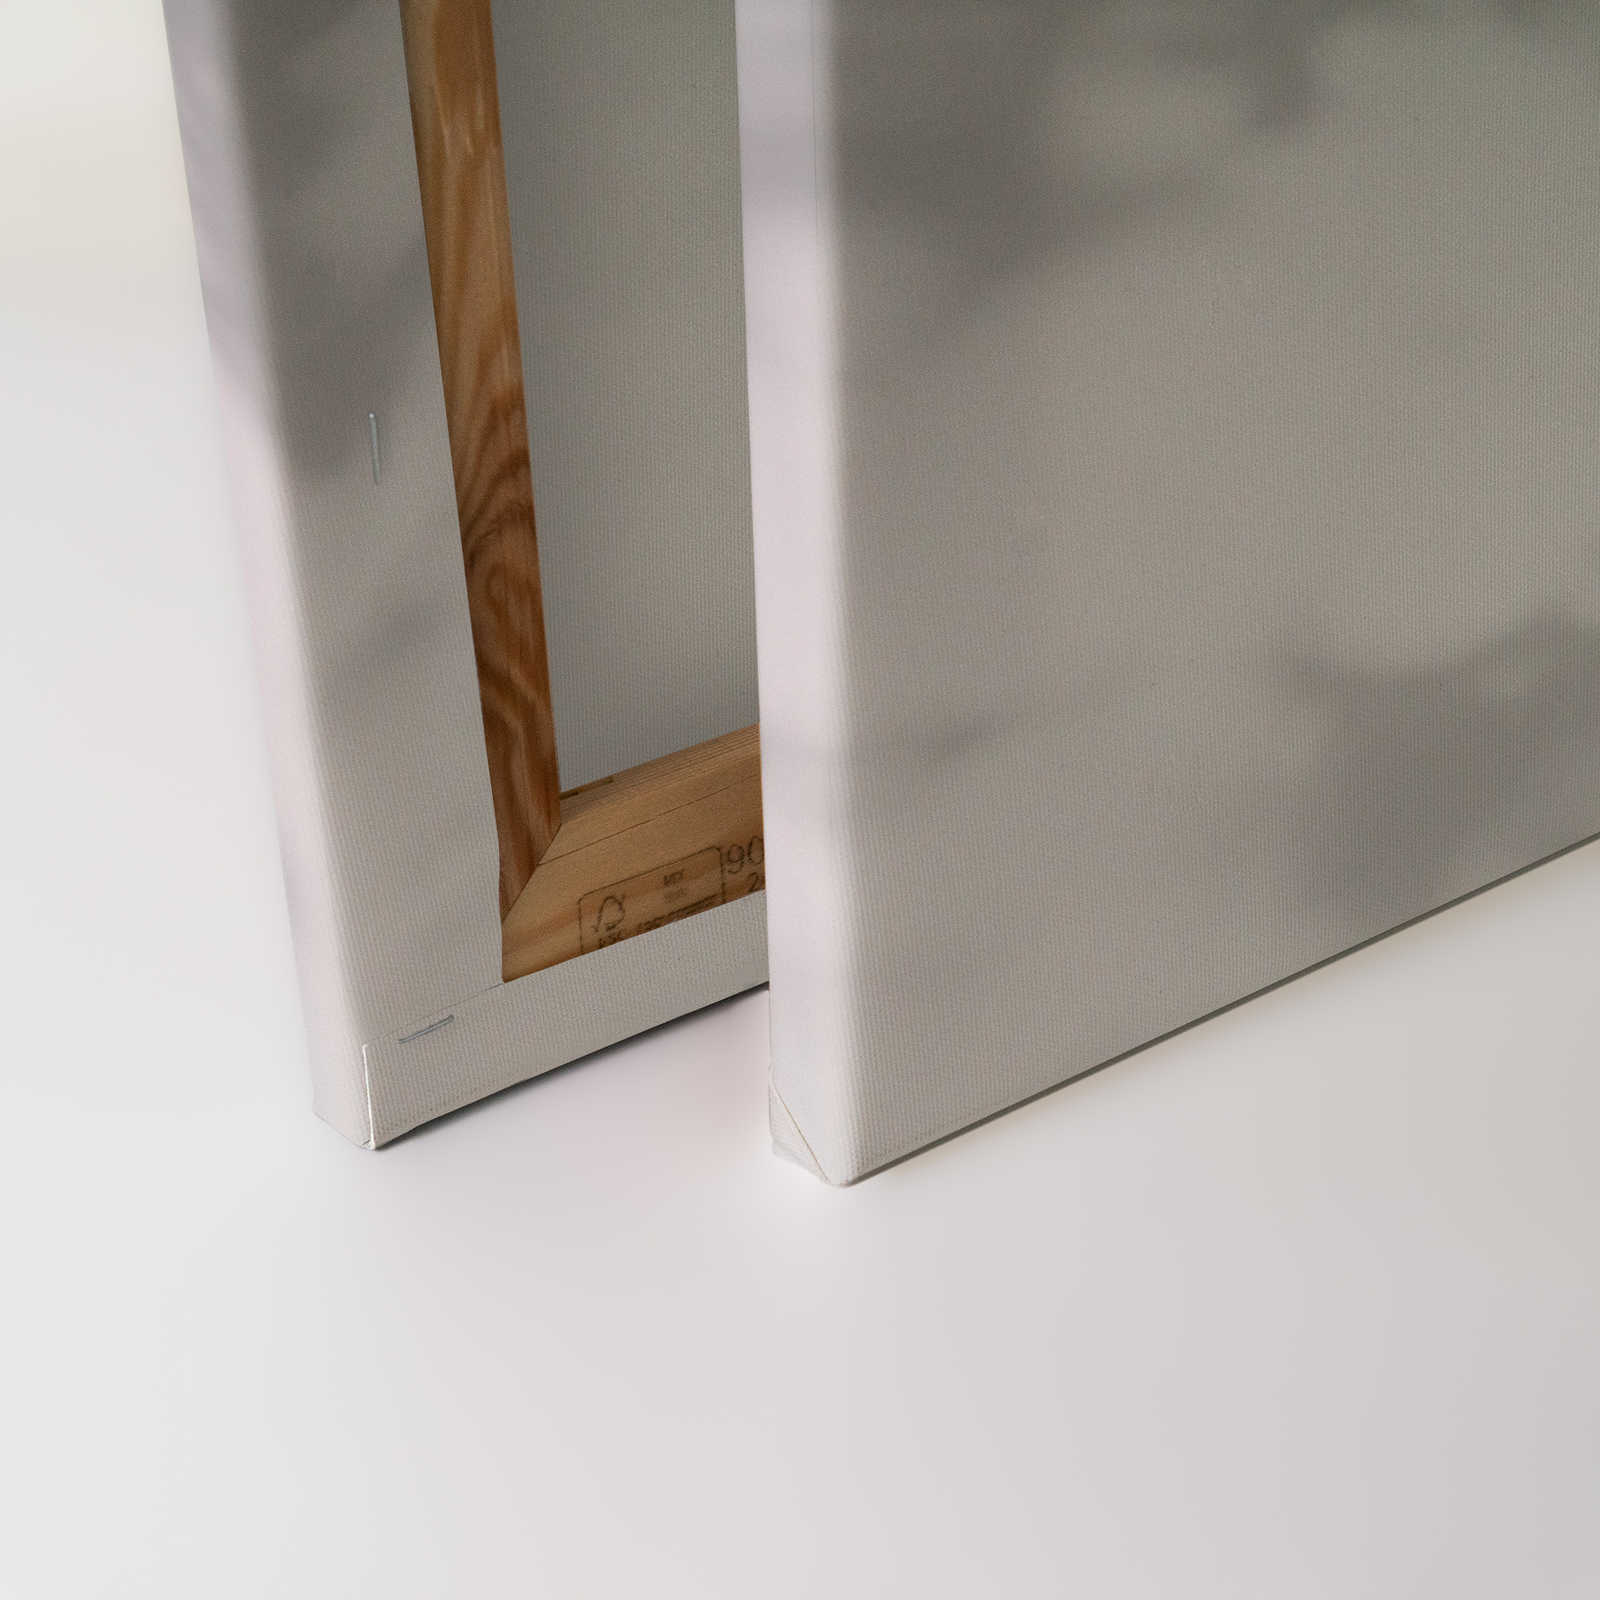             Light Room 1 - Leinwandbild Natur Schatten in Grau & Weiß – 1,20 m x 0,80 m
        